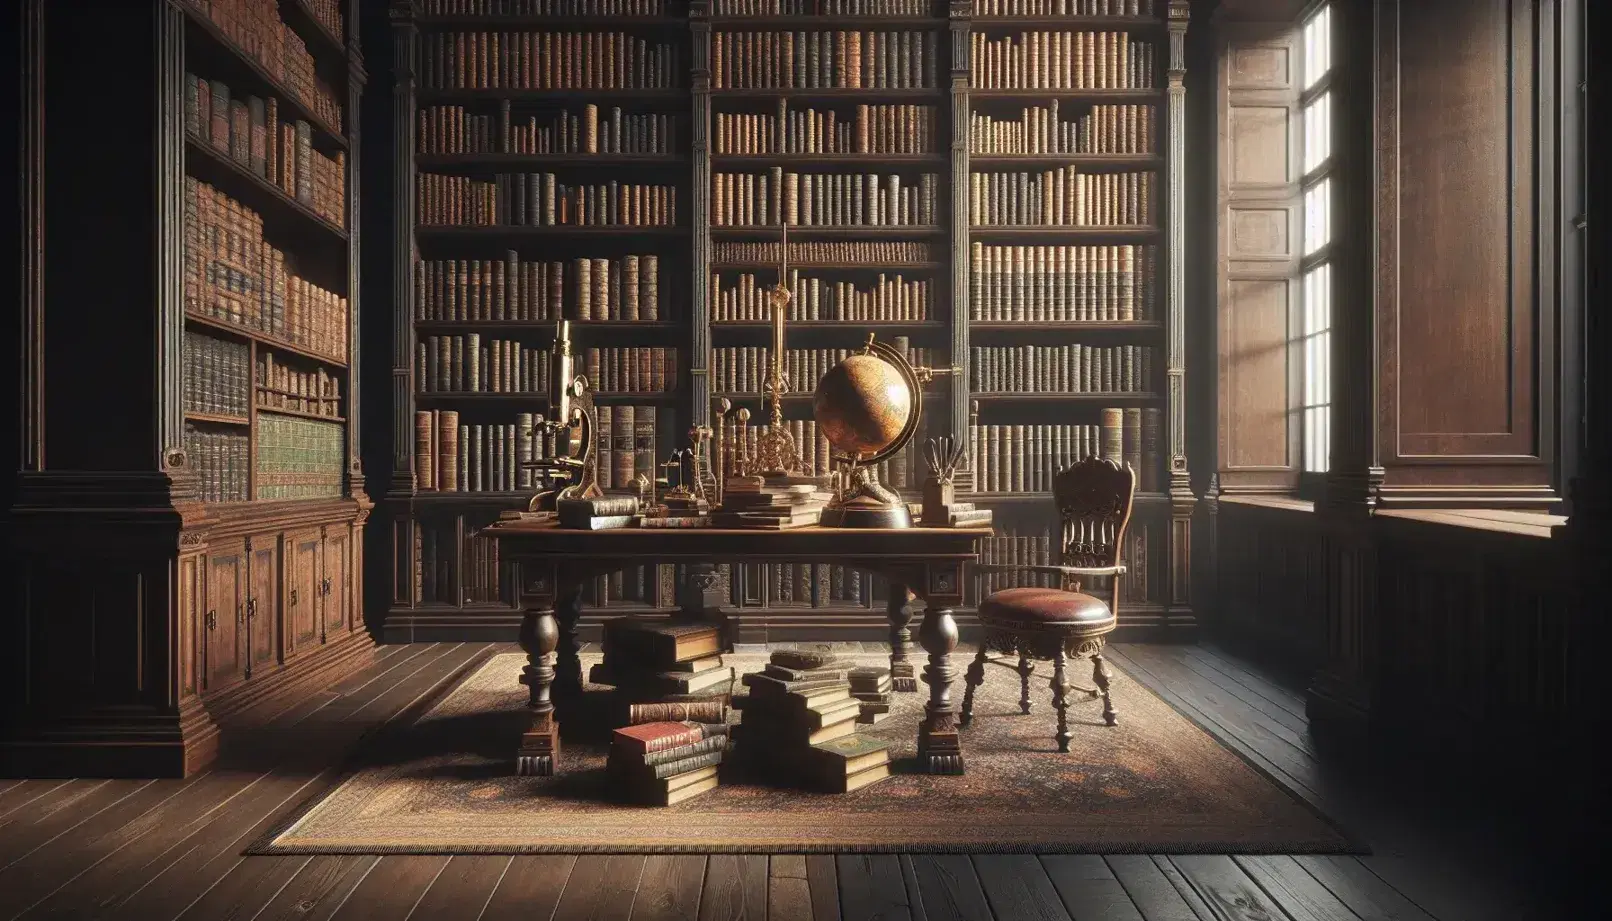 Biblioteca antigua con estantes de madera oscuros llenos de libros, mesa central con globo terráqueo y microscopio de latón, silla y alfombra persa.